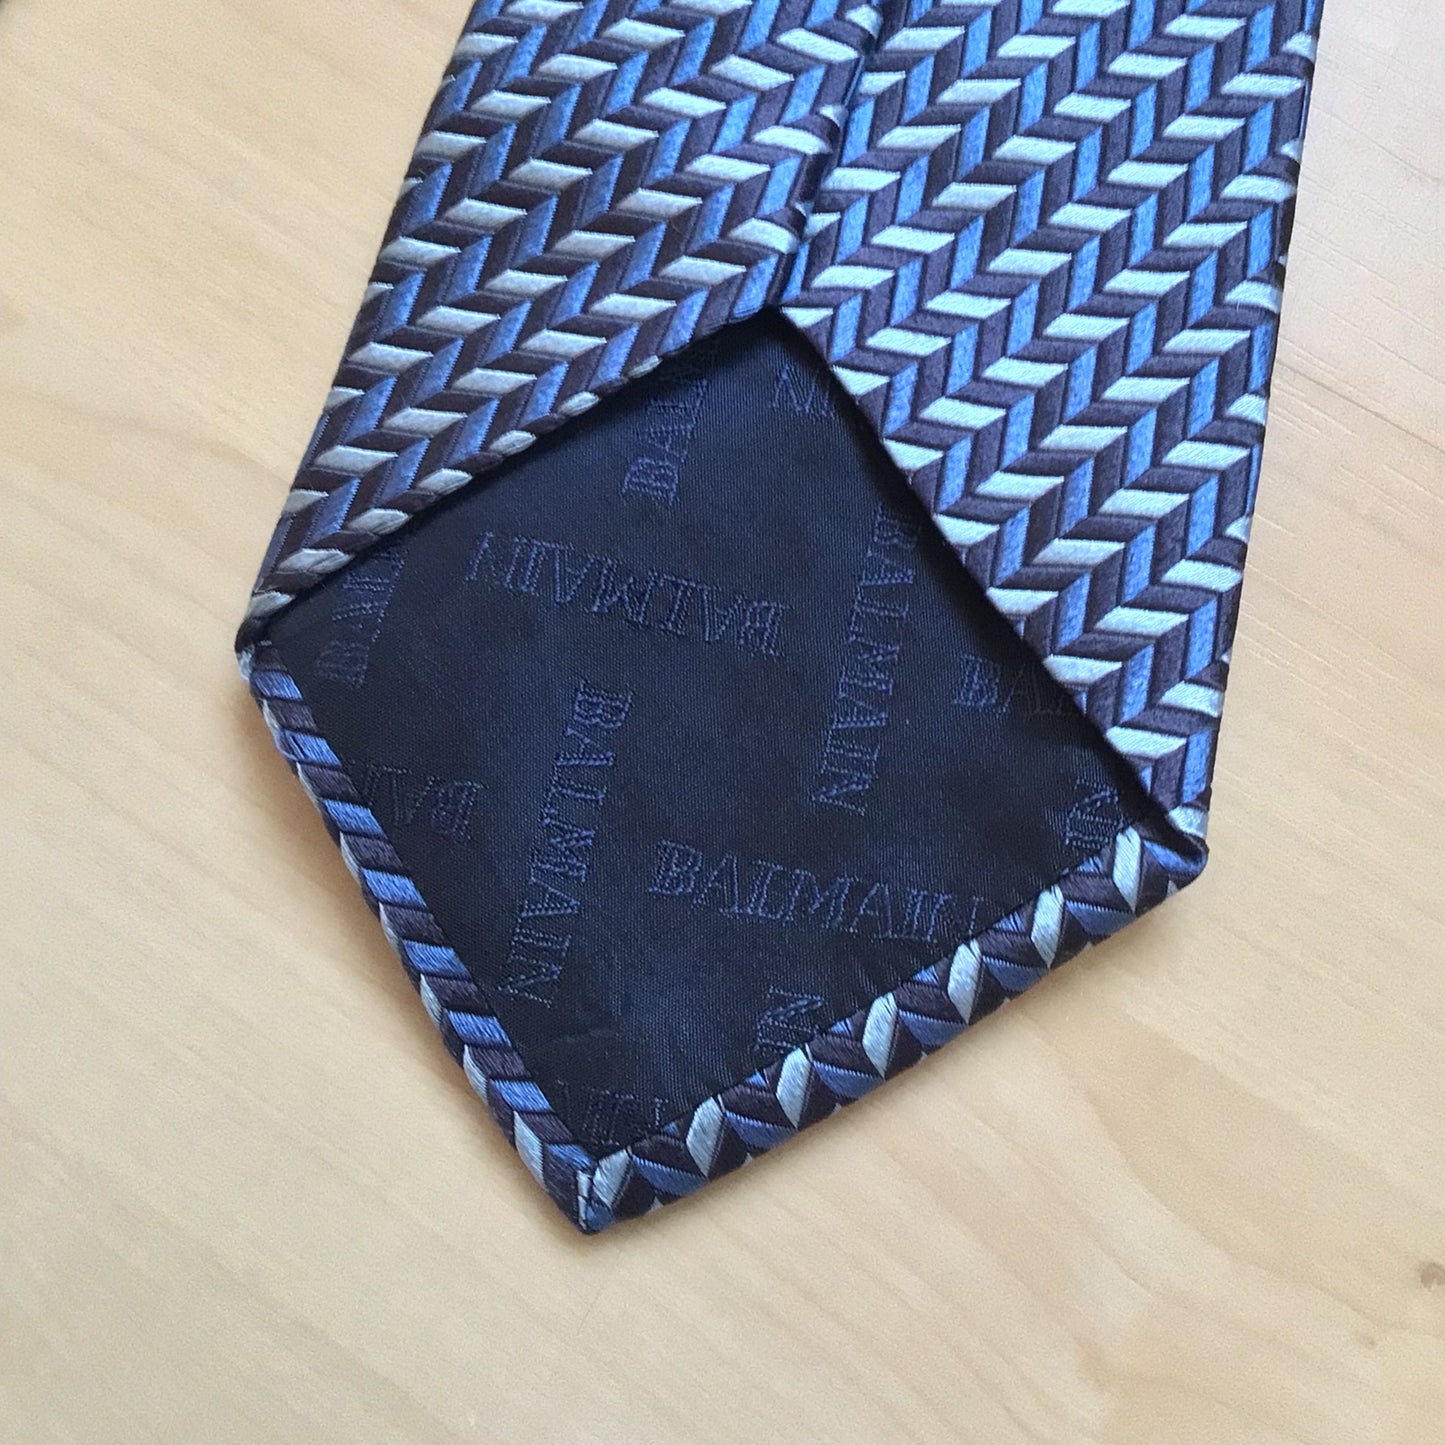 Balmain Paris Blue Patterned Tie 100% Silk Made in Italy